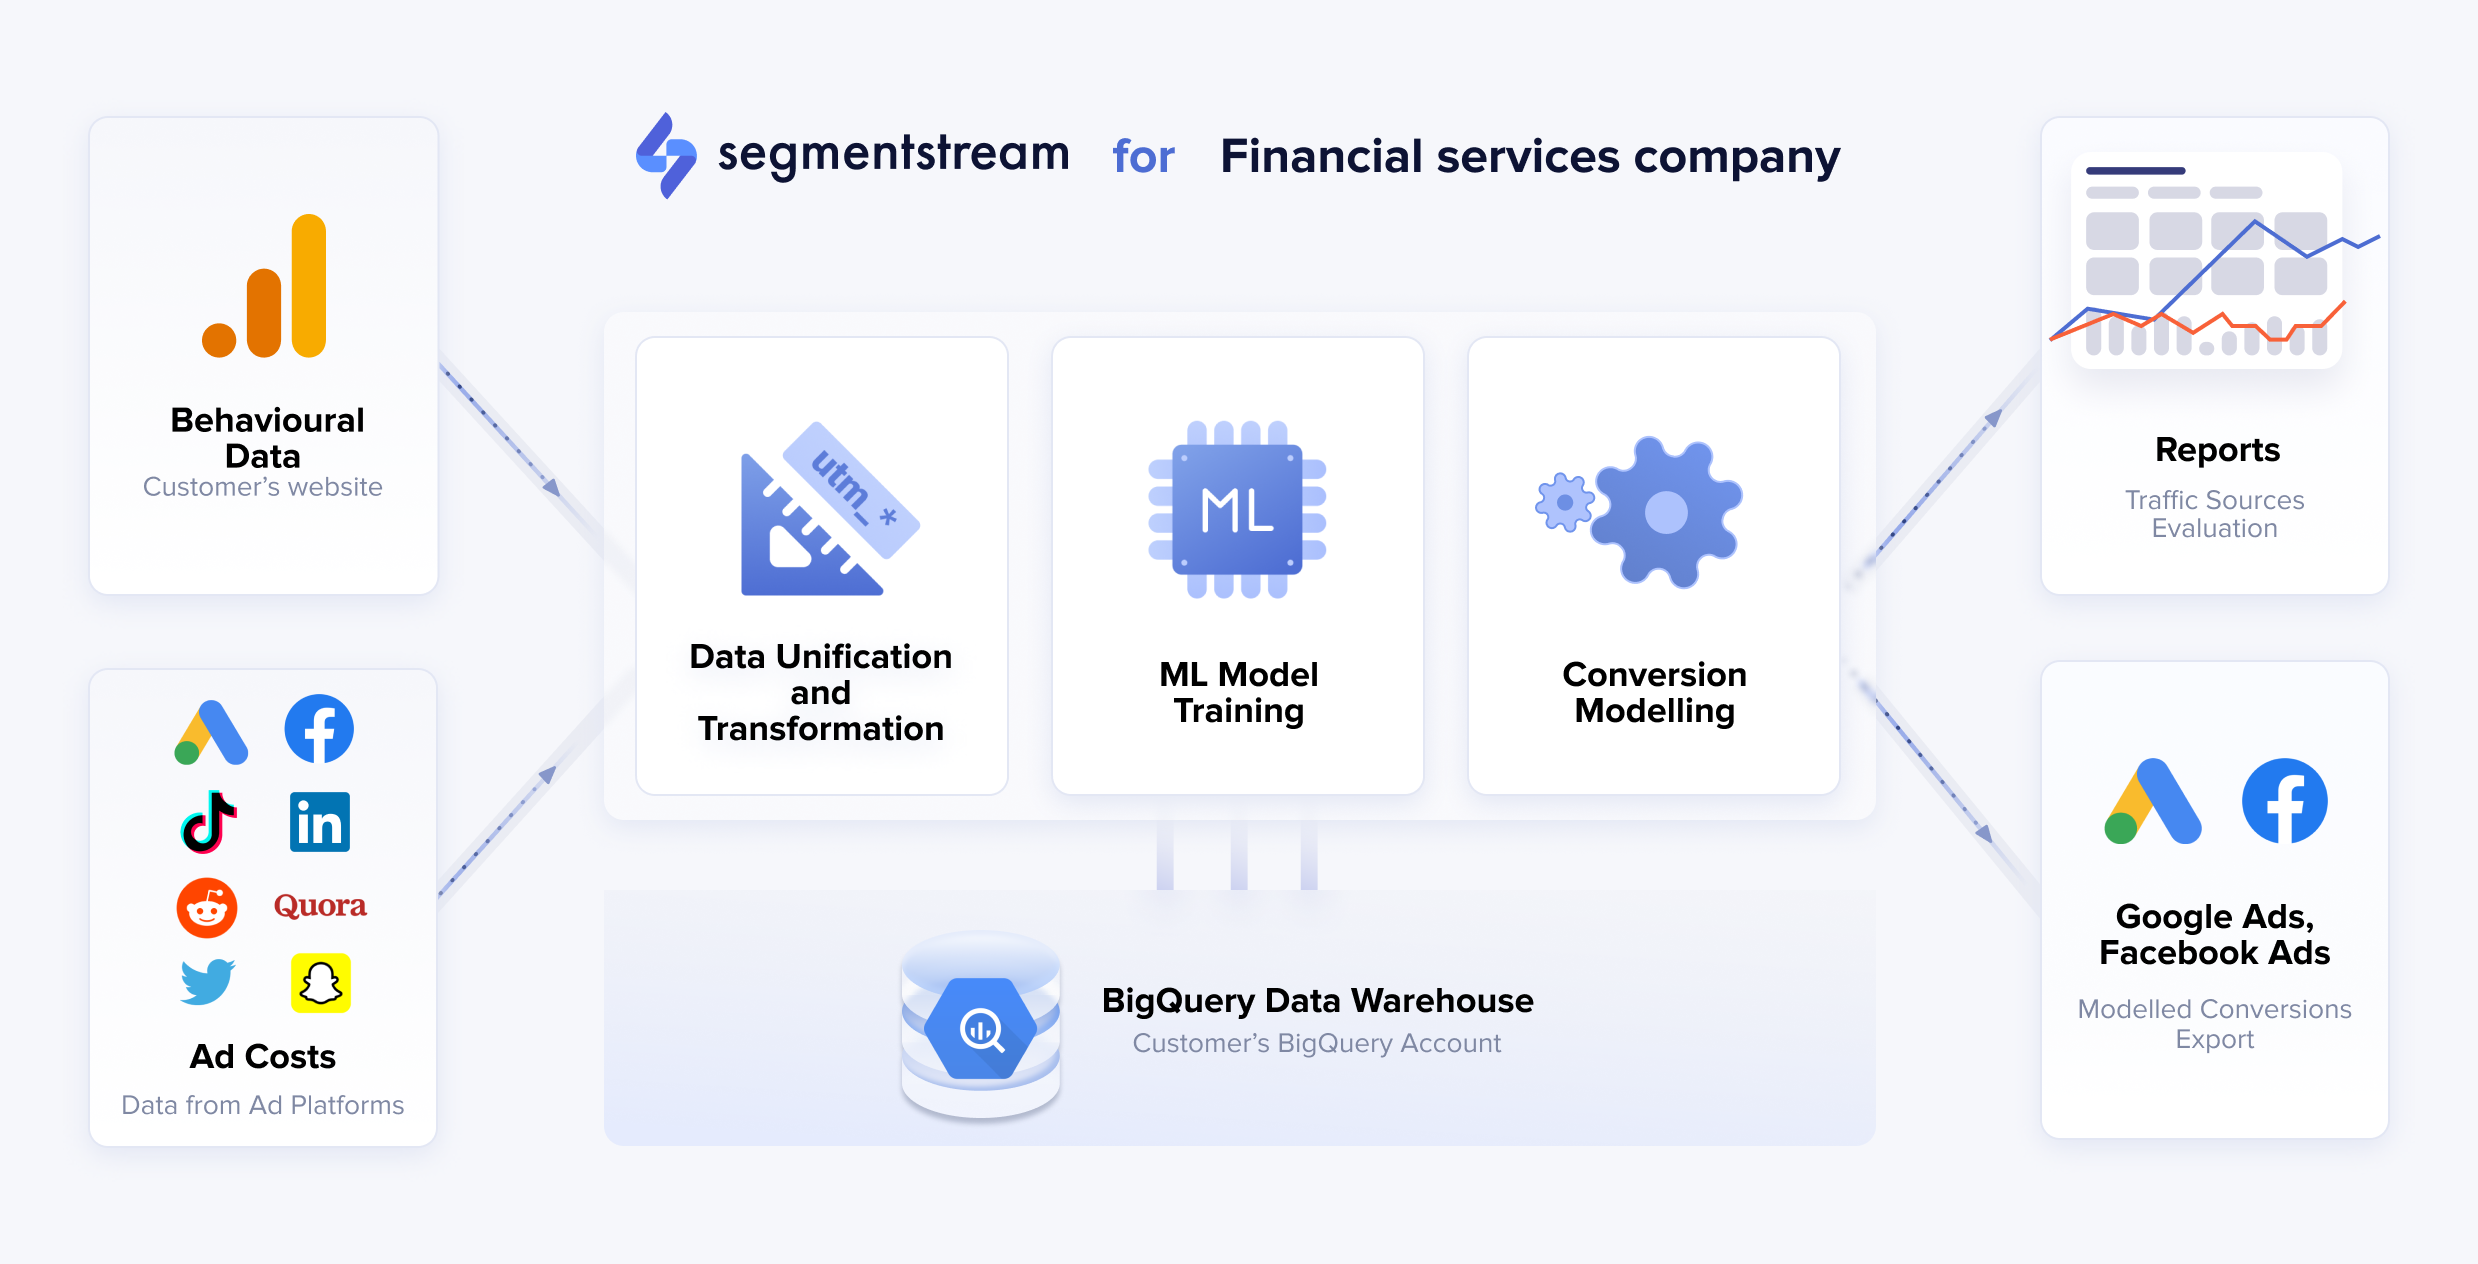 SegmentStream solution for financial services company